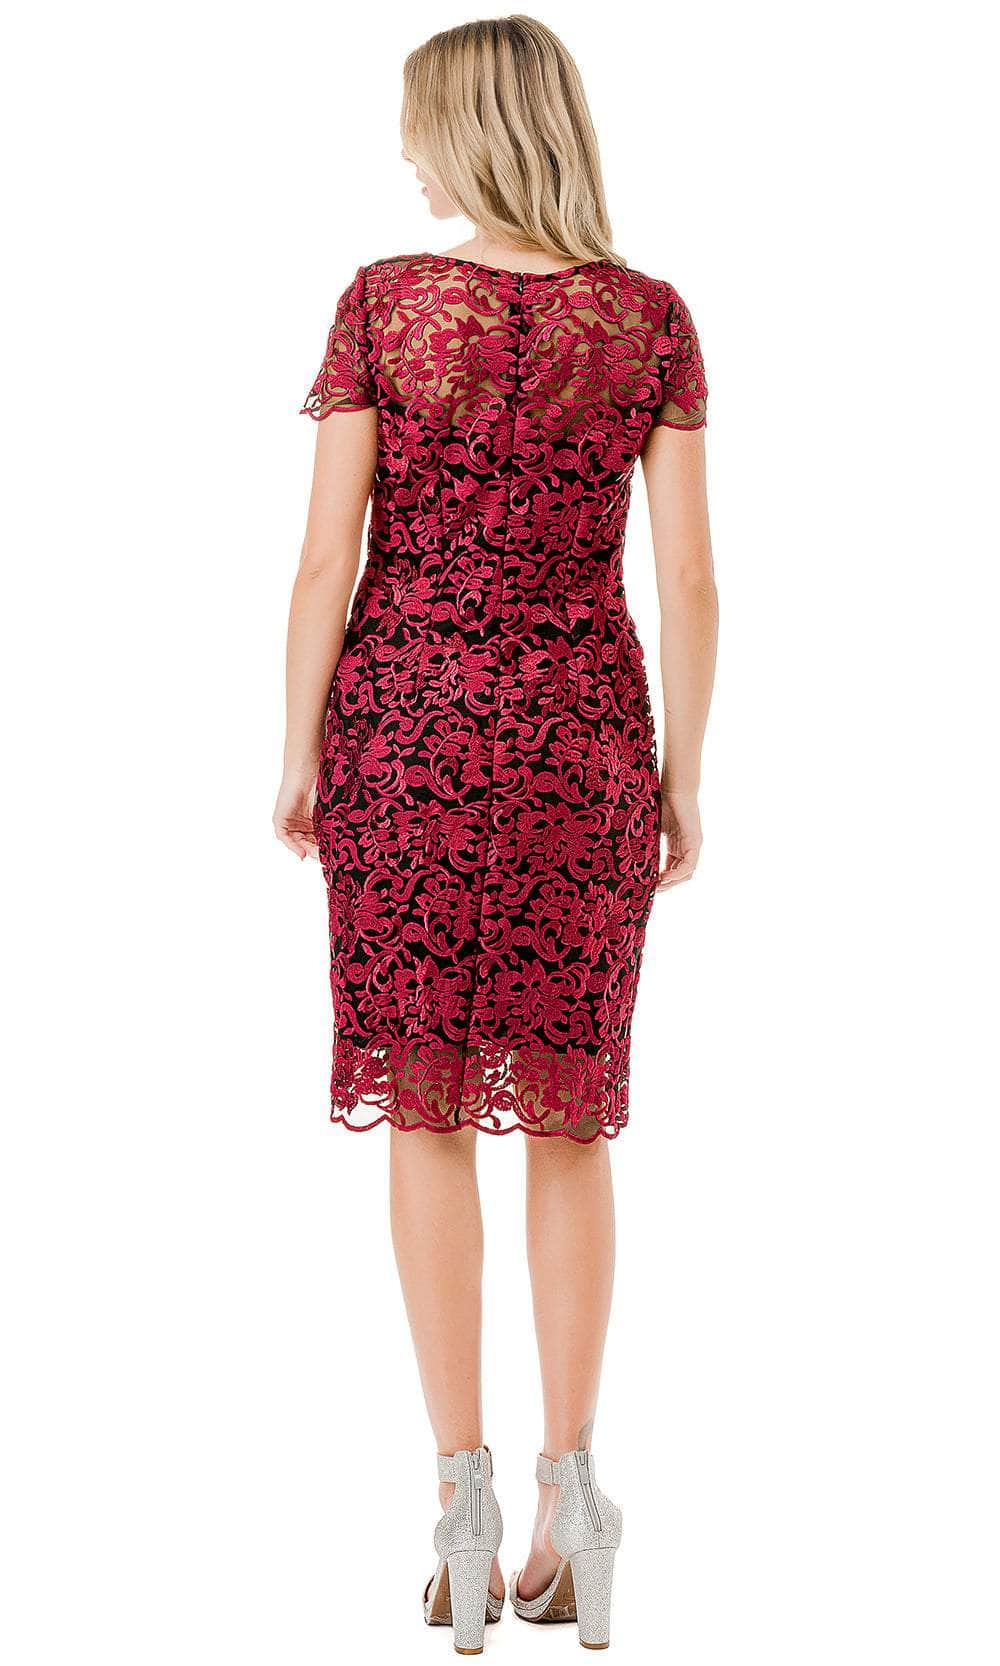 Aspeed Design D713 - Illusion Jewel Knee Length Formal Dress Special Occasion Dress